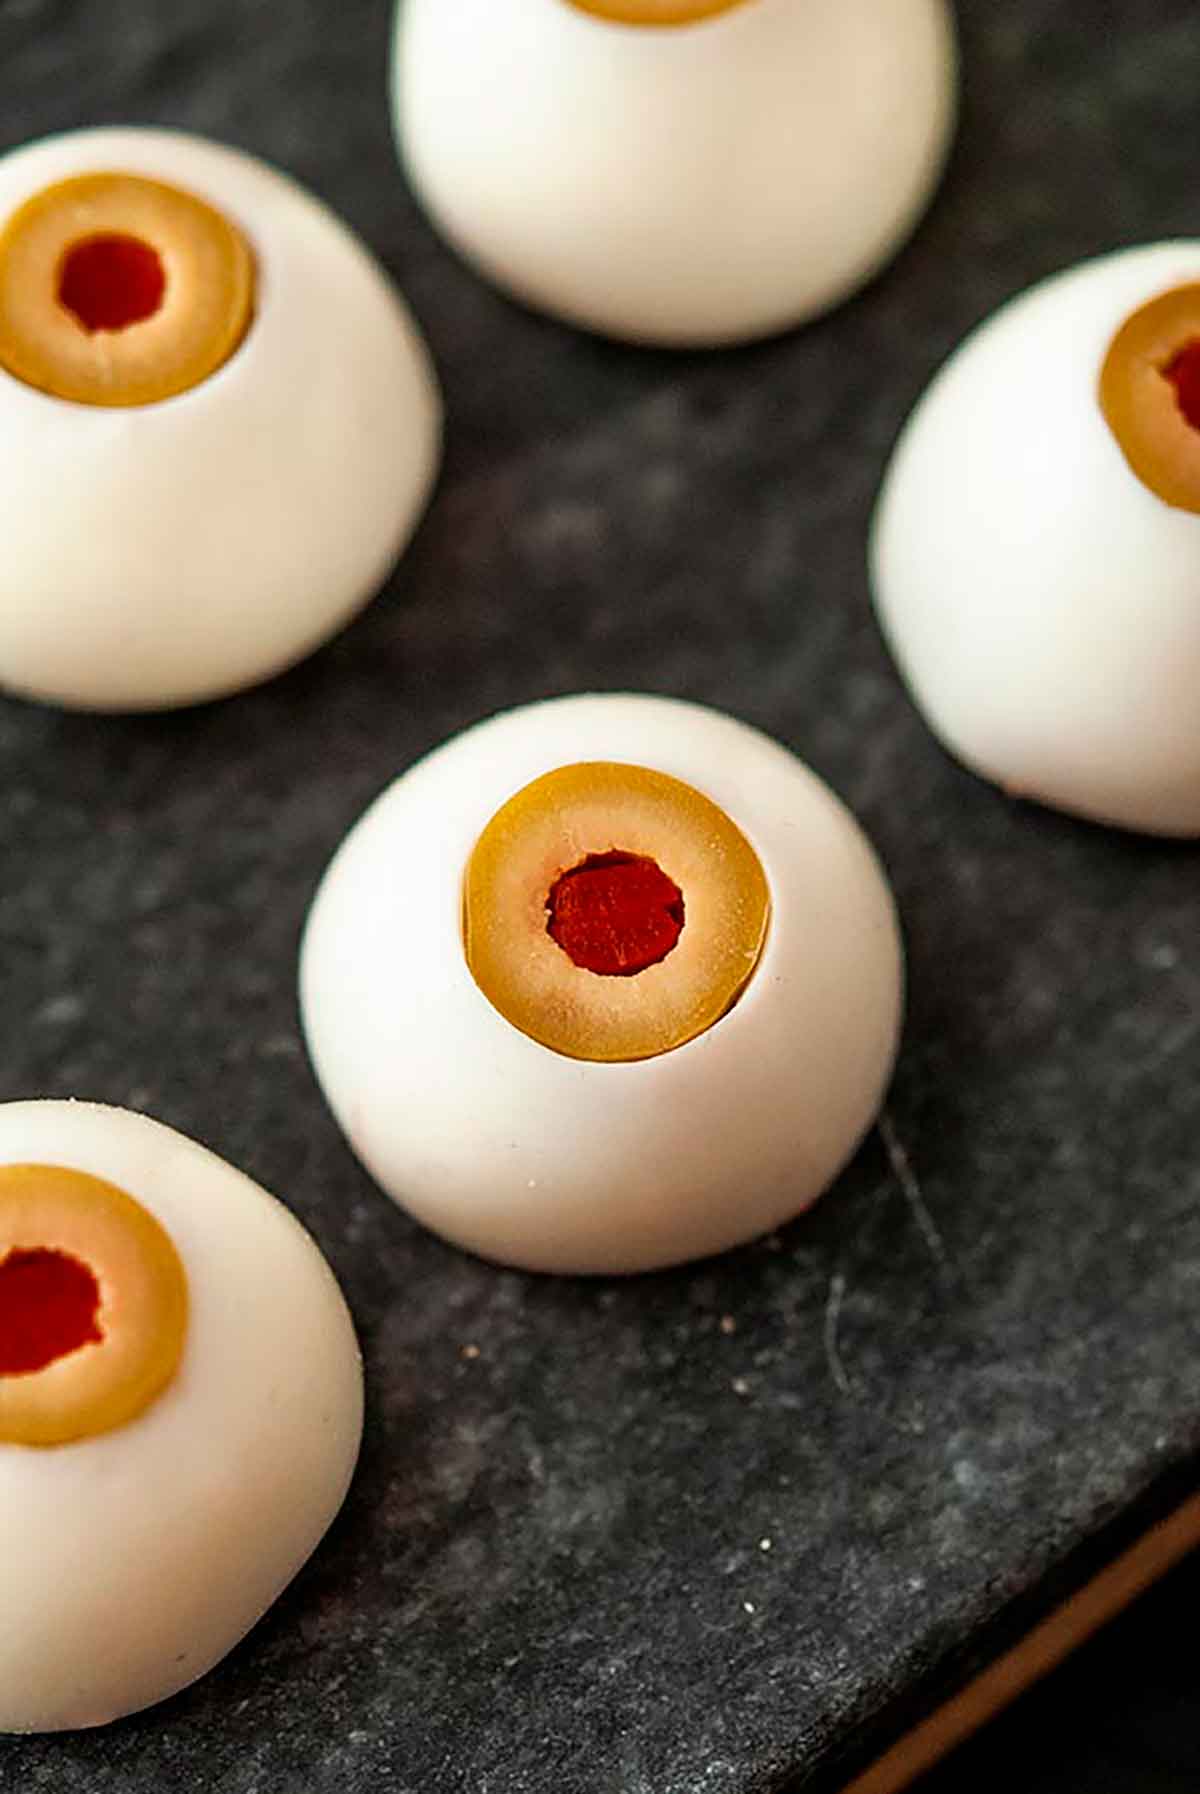 5 deviled eggs that look like eyeballs on a marble plate.